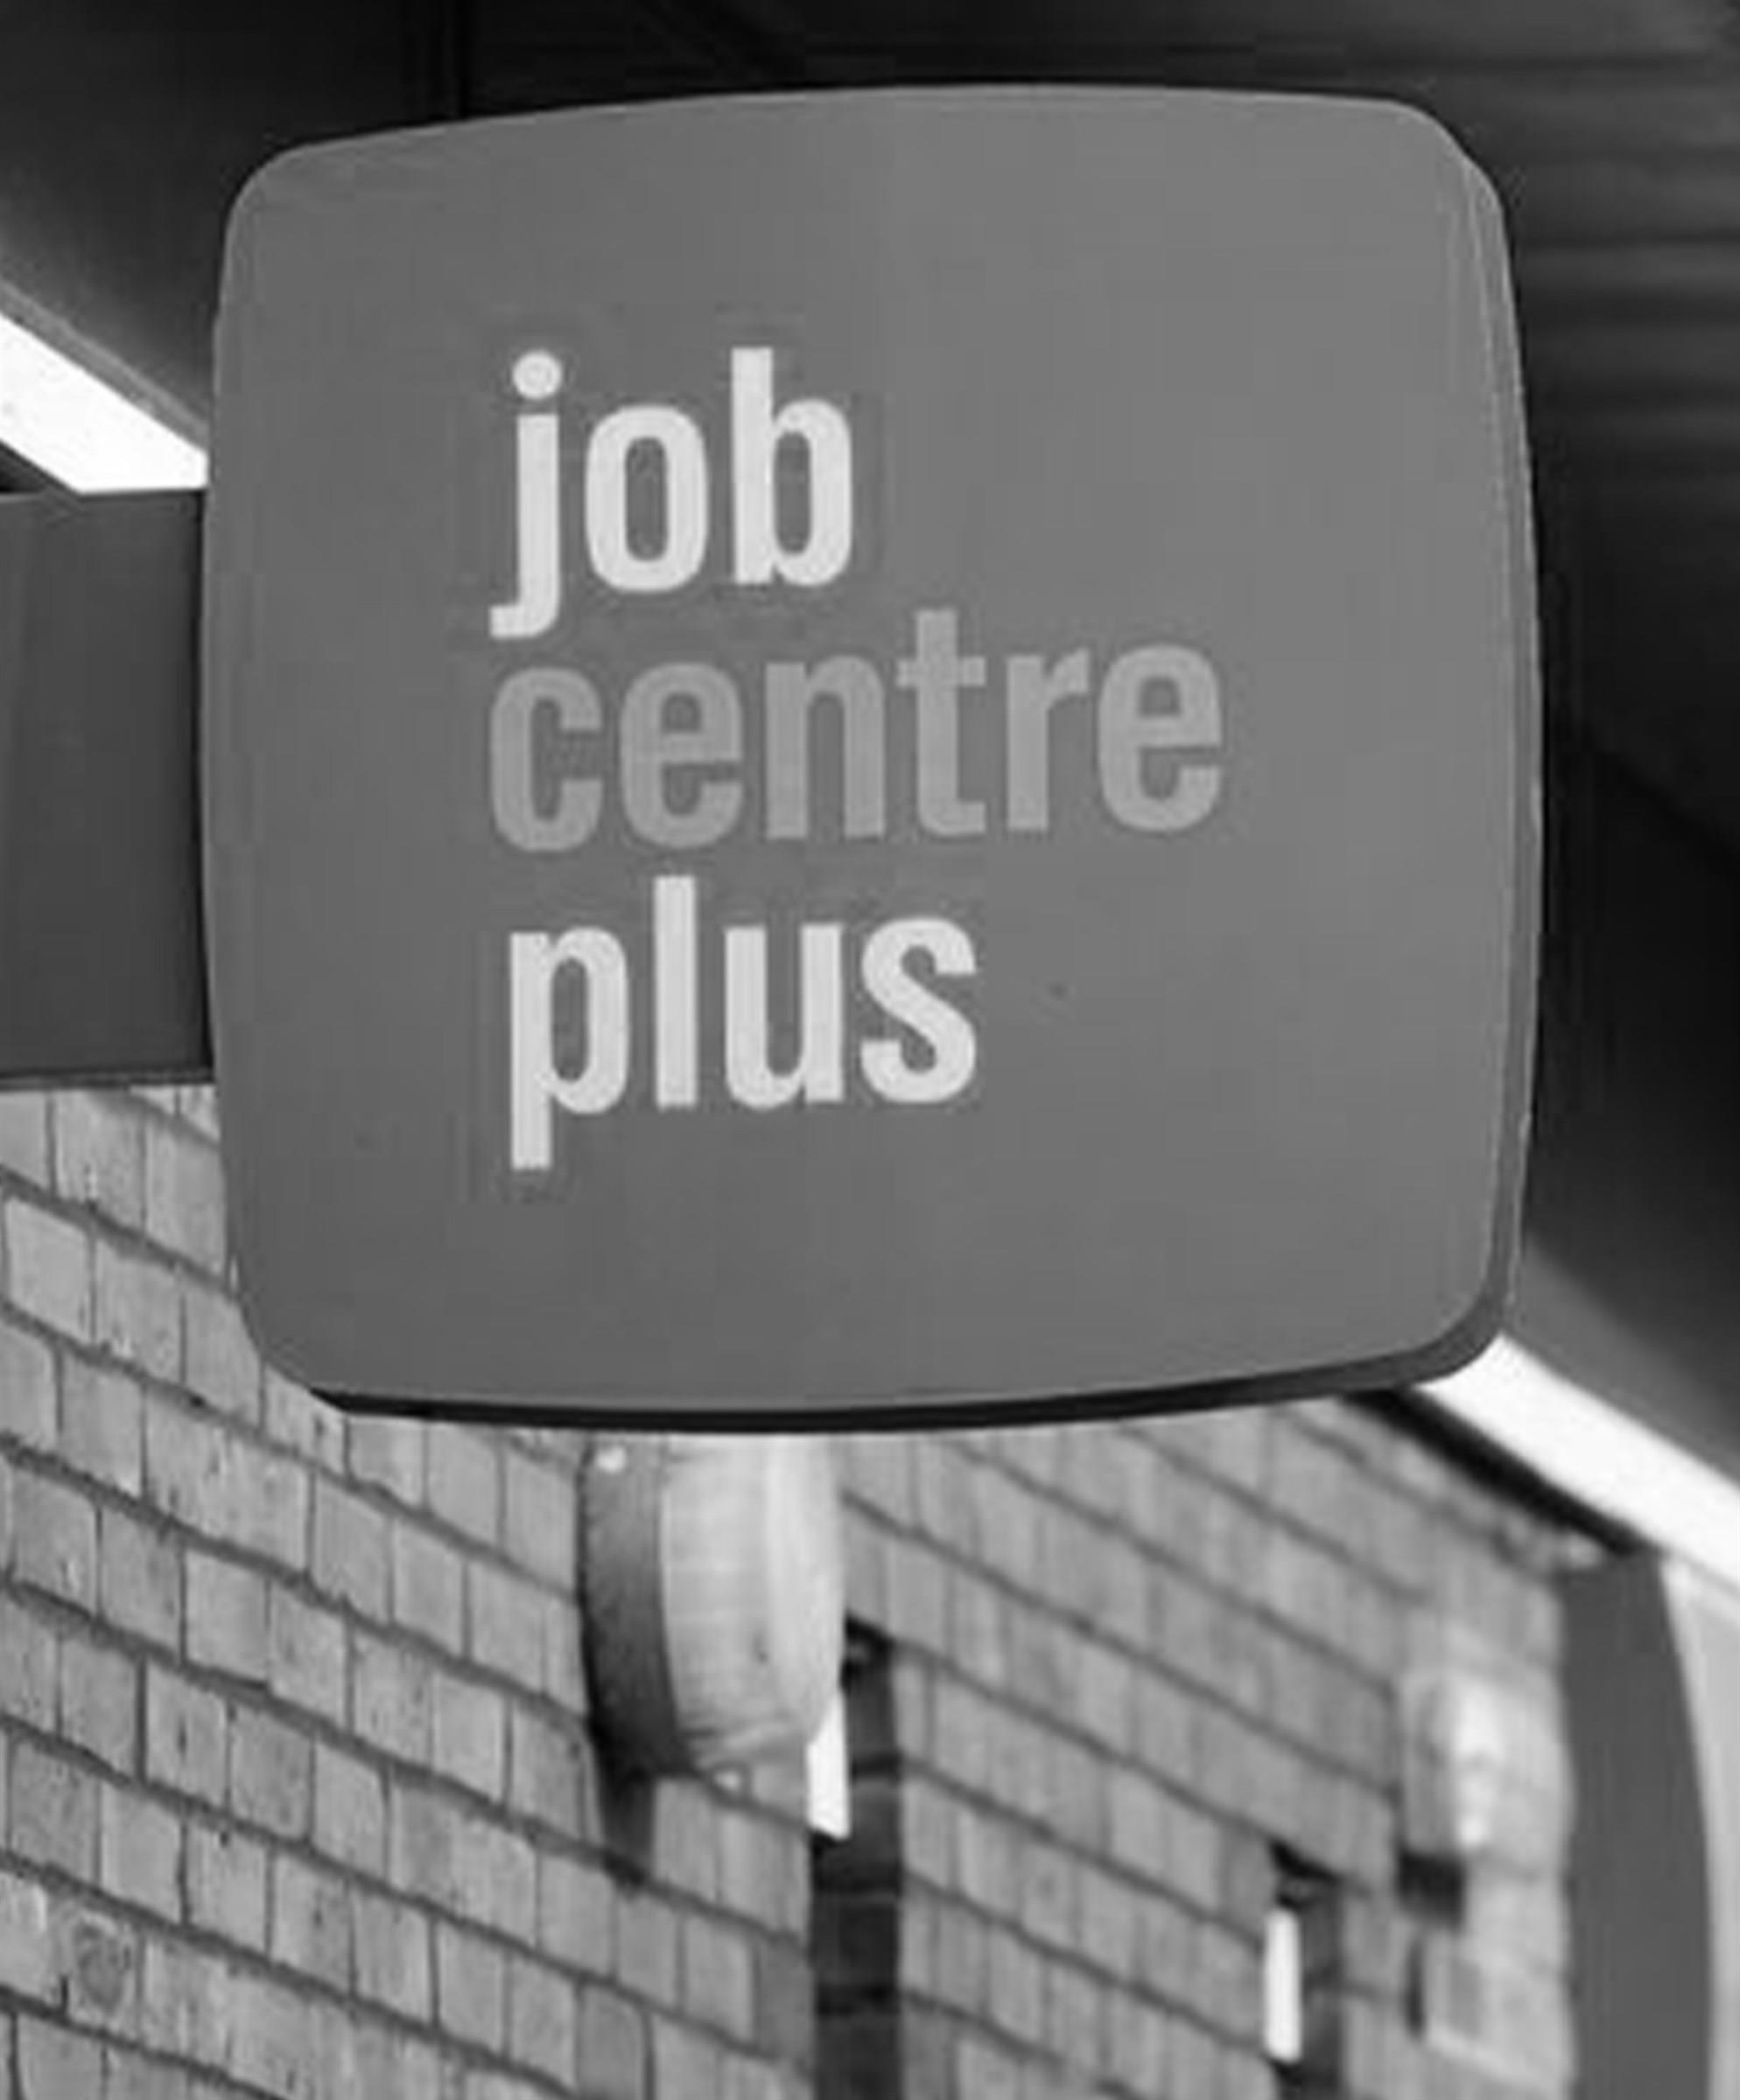 Unemployment and skills shortage